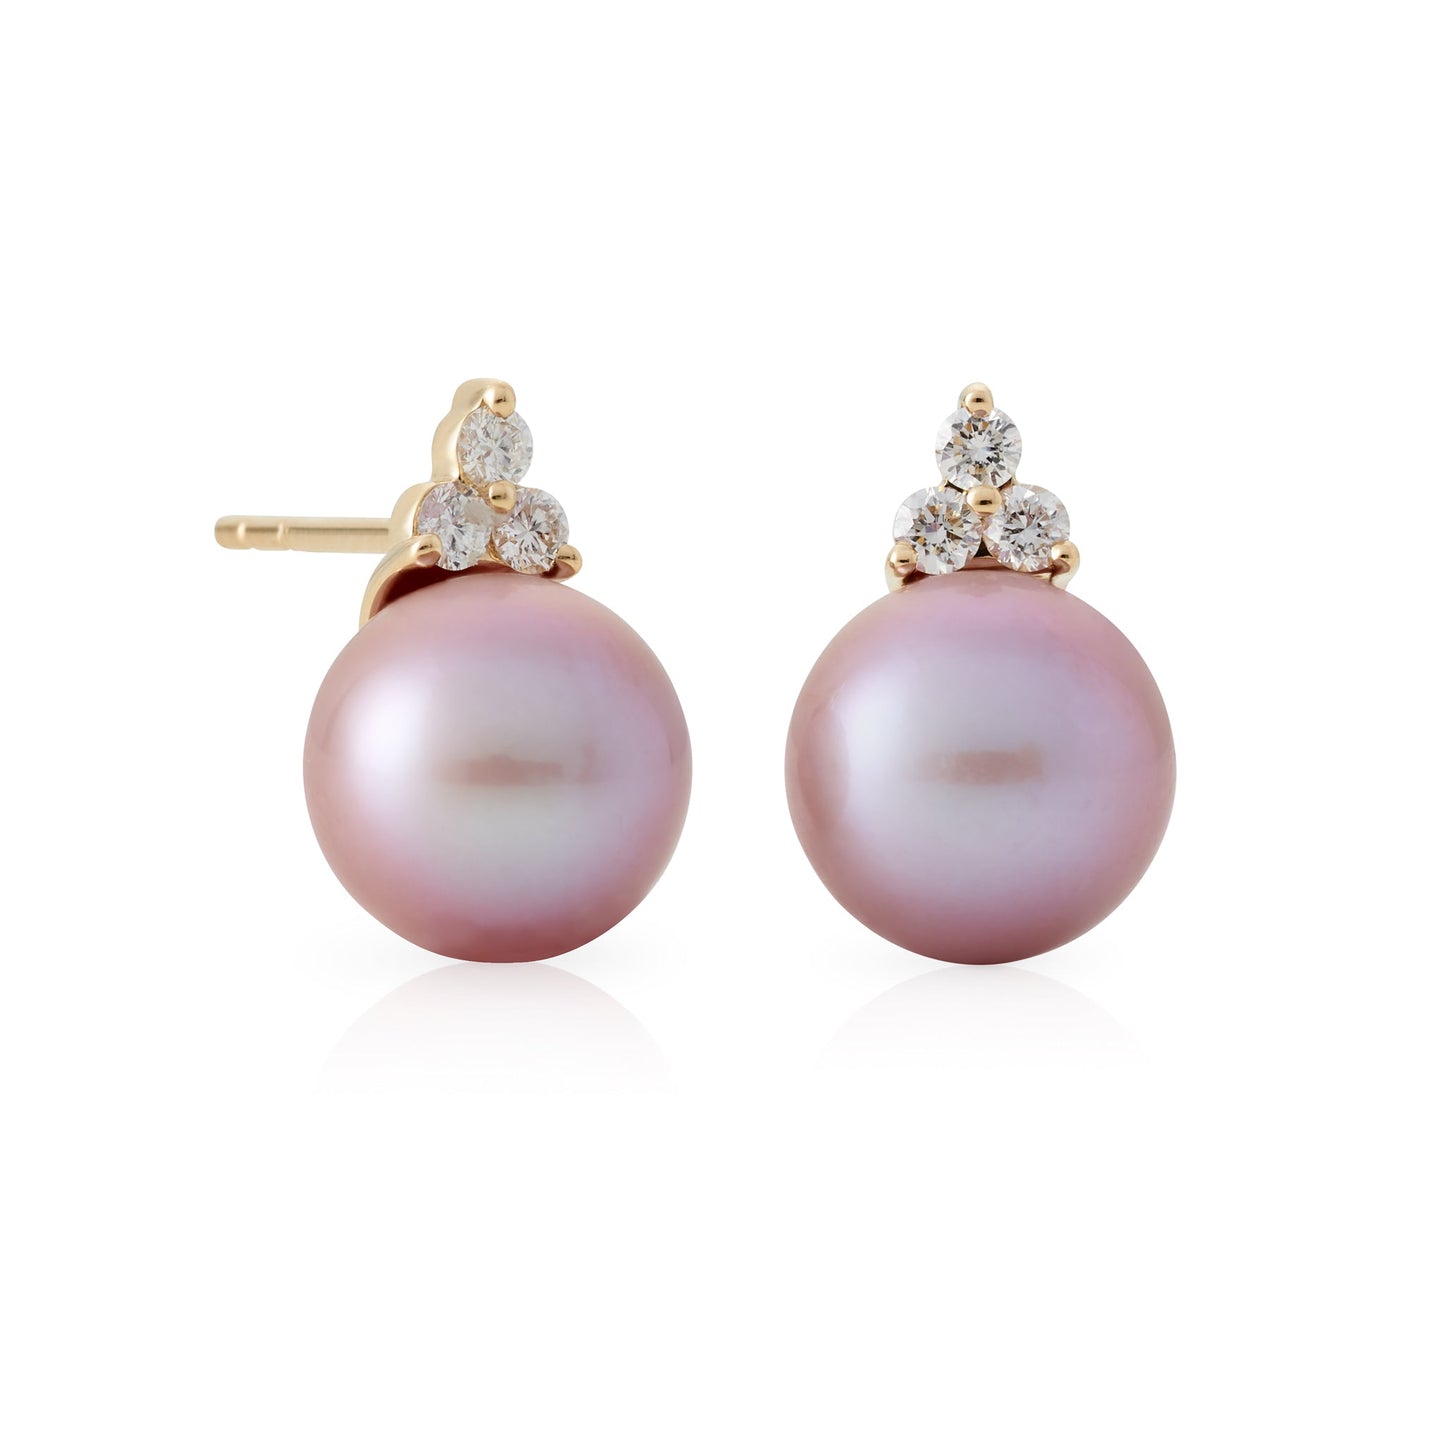 Madison Earrings in Pink Pearls & Diamonds